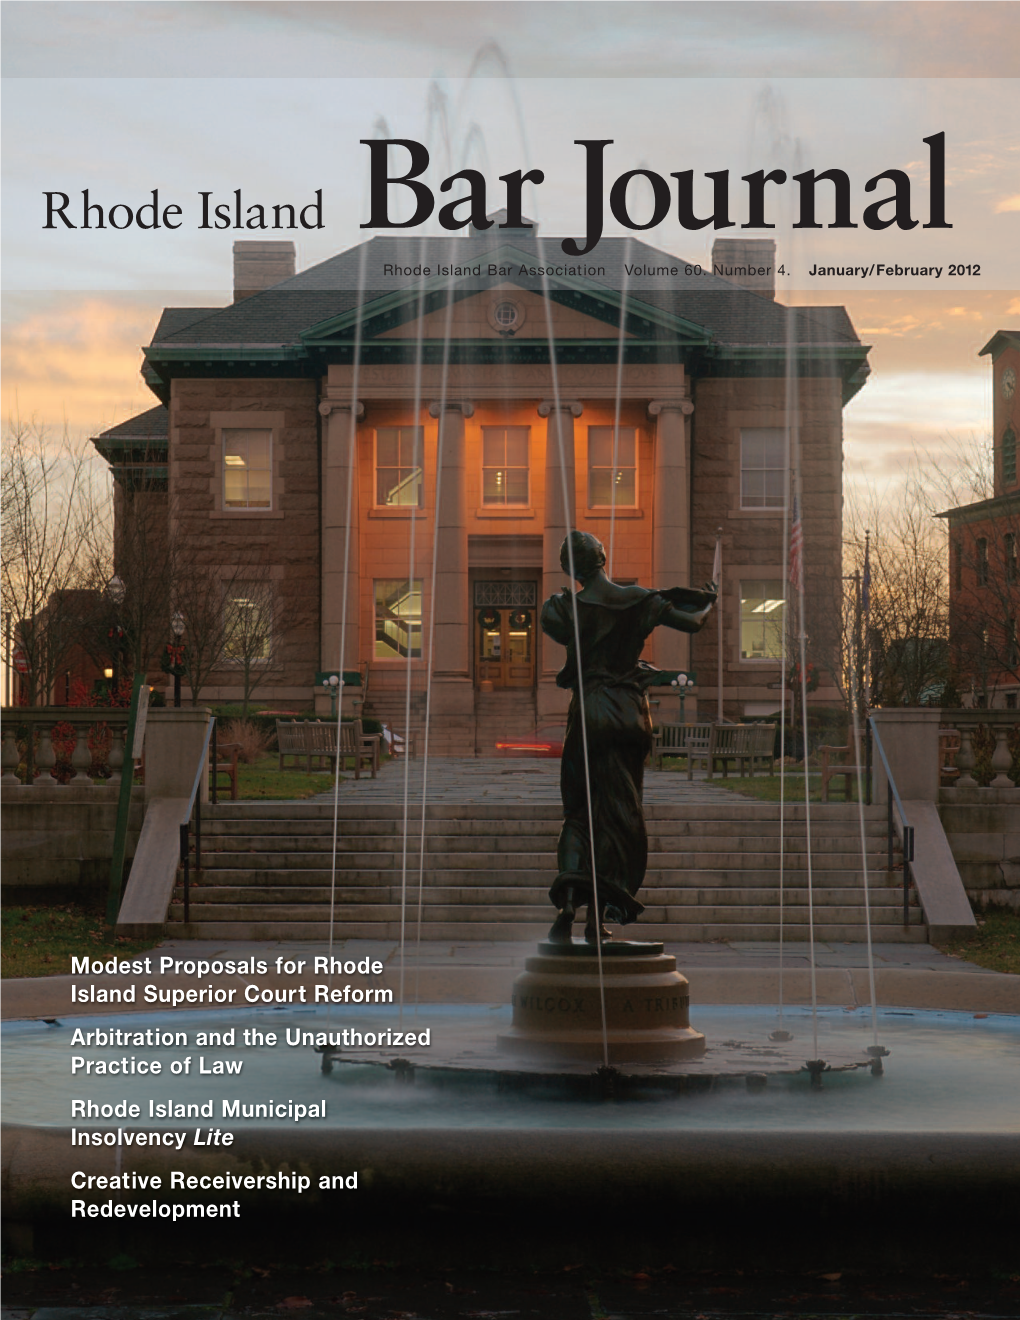 Rhode Island Bar Journal, 115 Cedar Street, Providence, RI 02903, (401) 421-5740